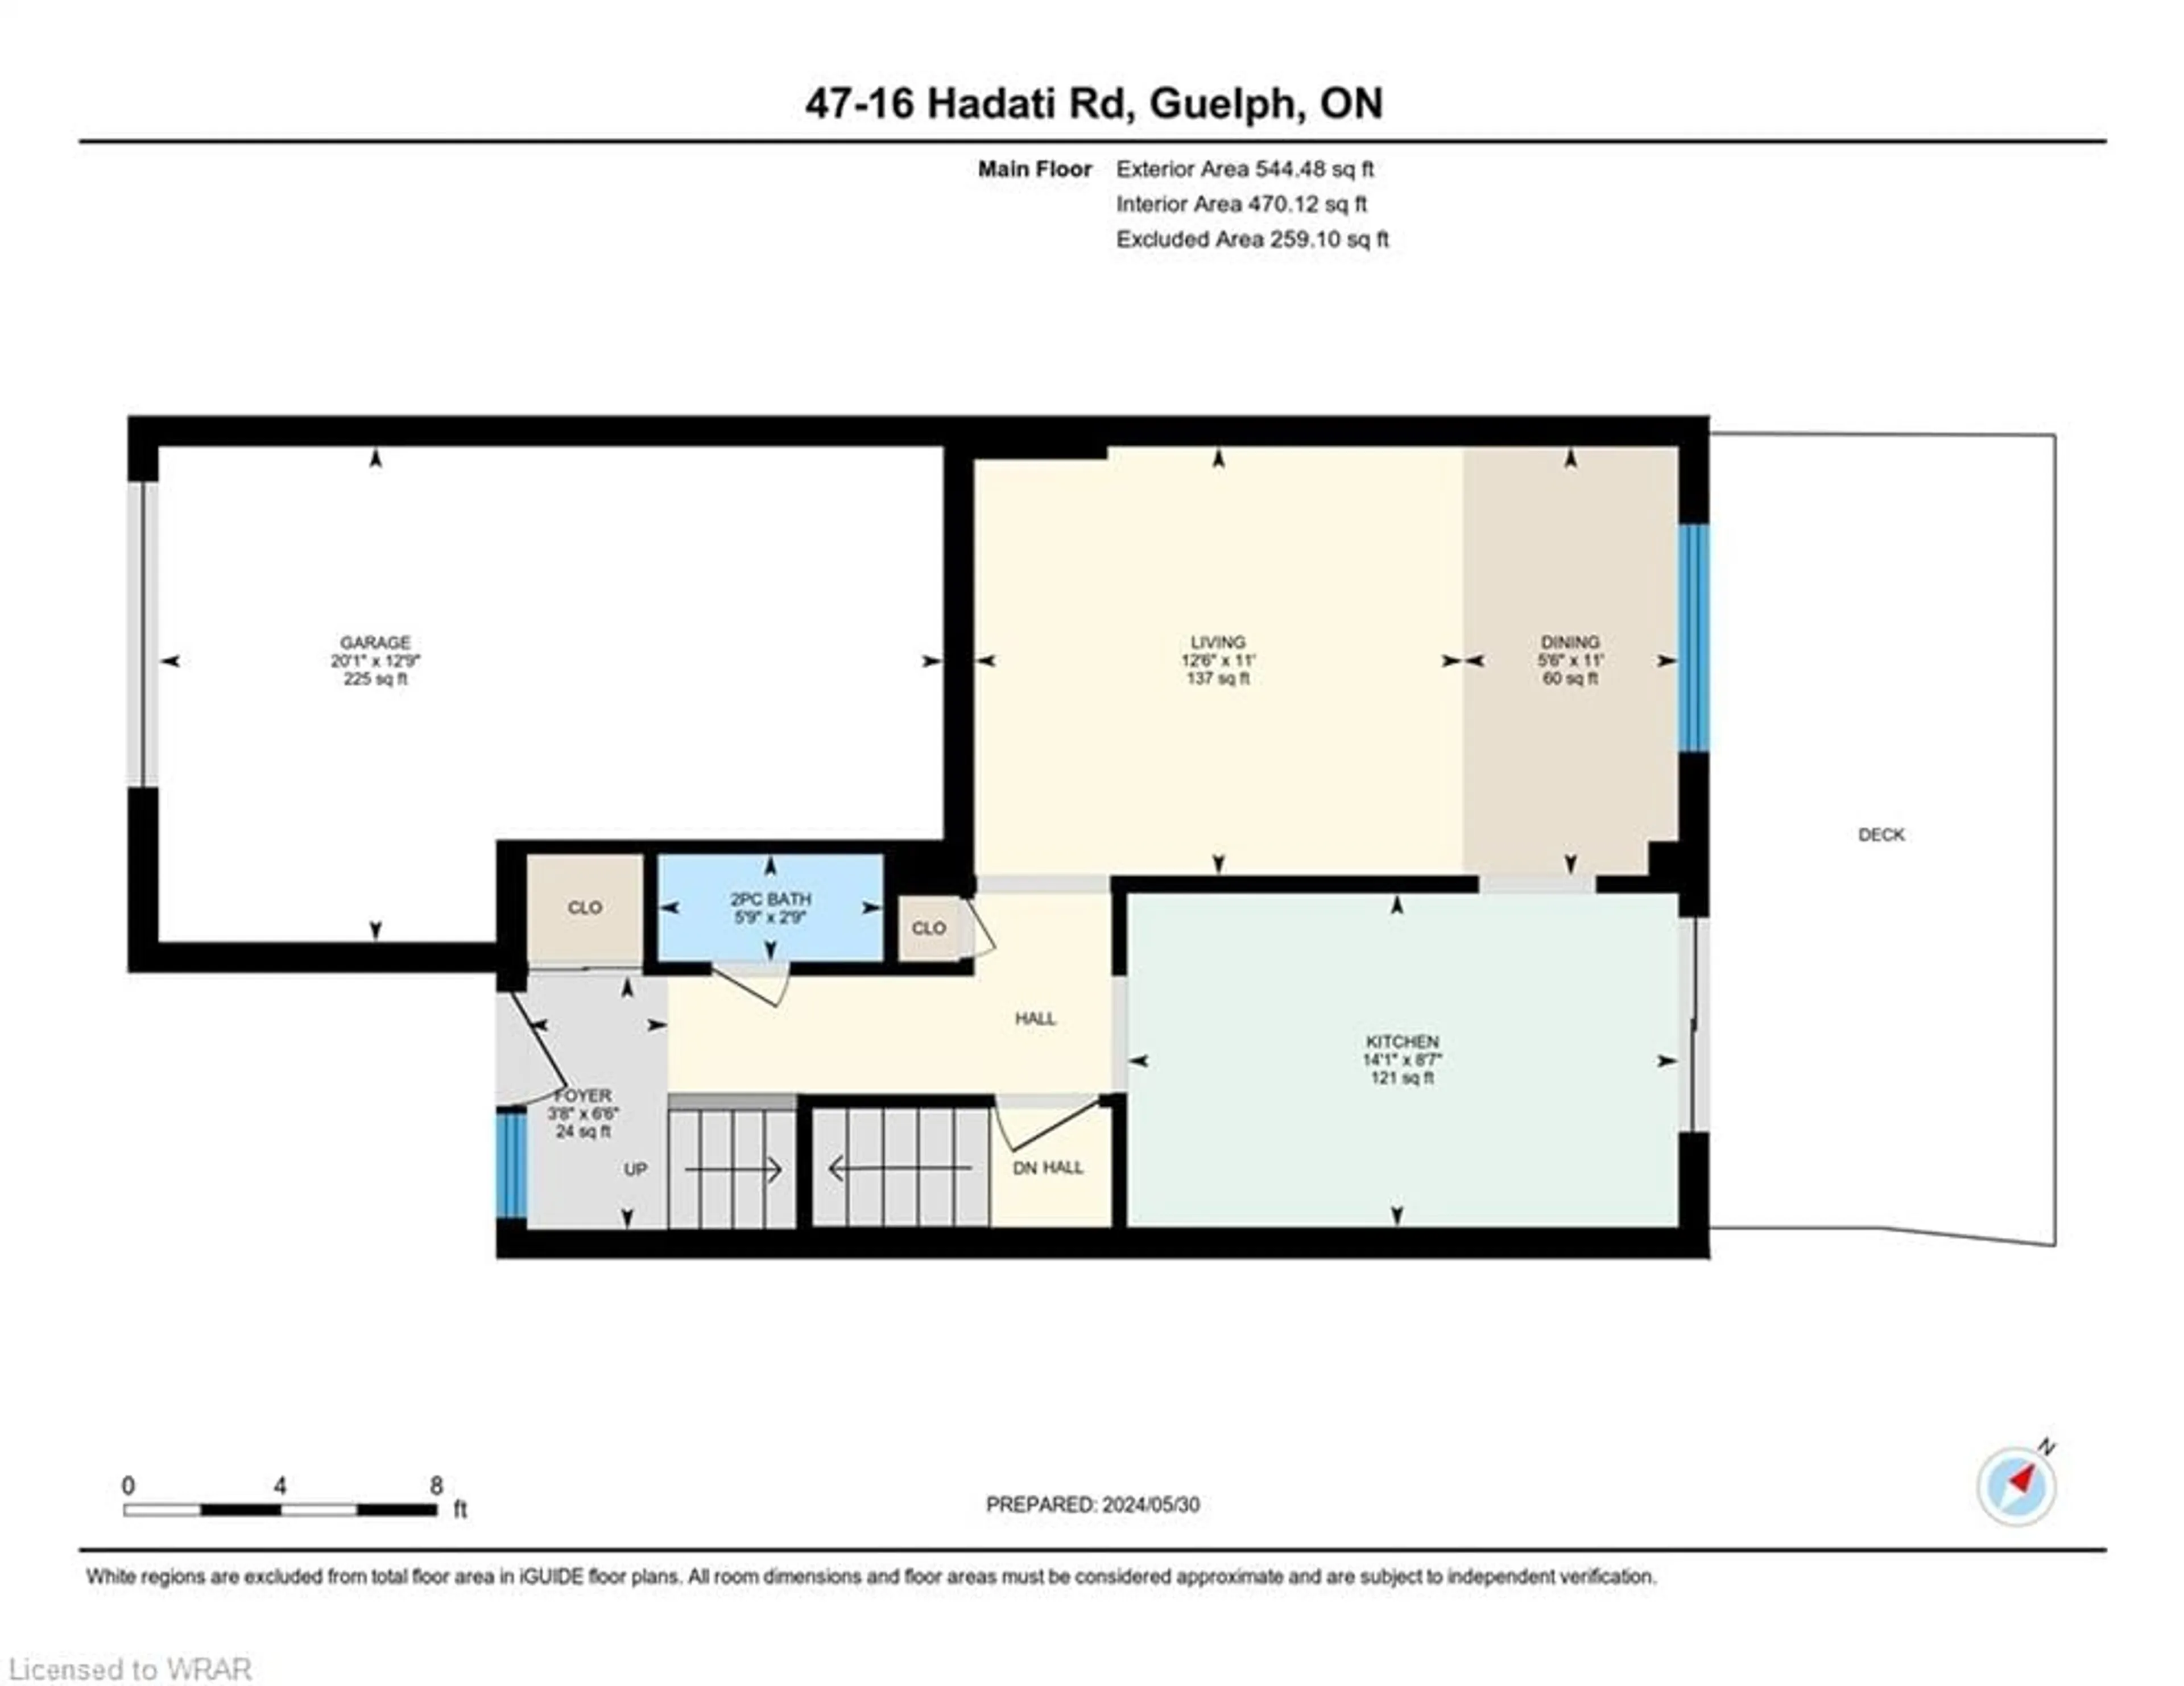 Floor plan for 16 Hadati Rd #47, Guelph Ontario N1E 6M2